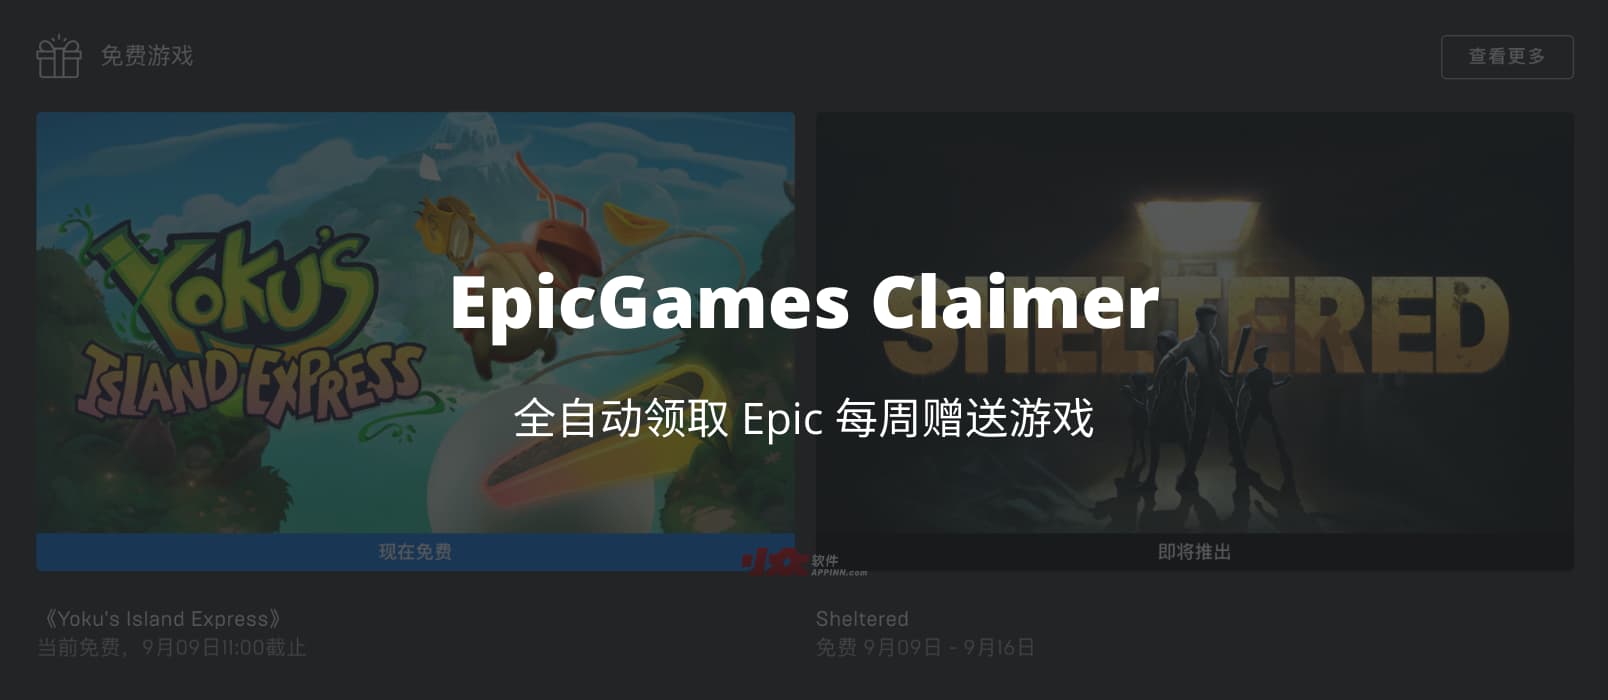 EpicGames Claimer -  用 Docker，全自动领取 Epic 每周赠送游戏